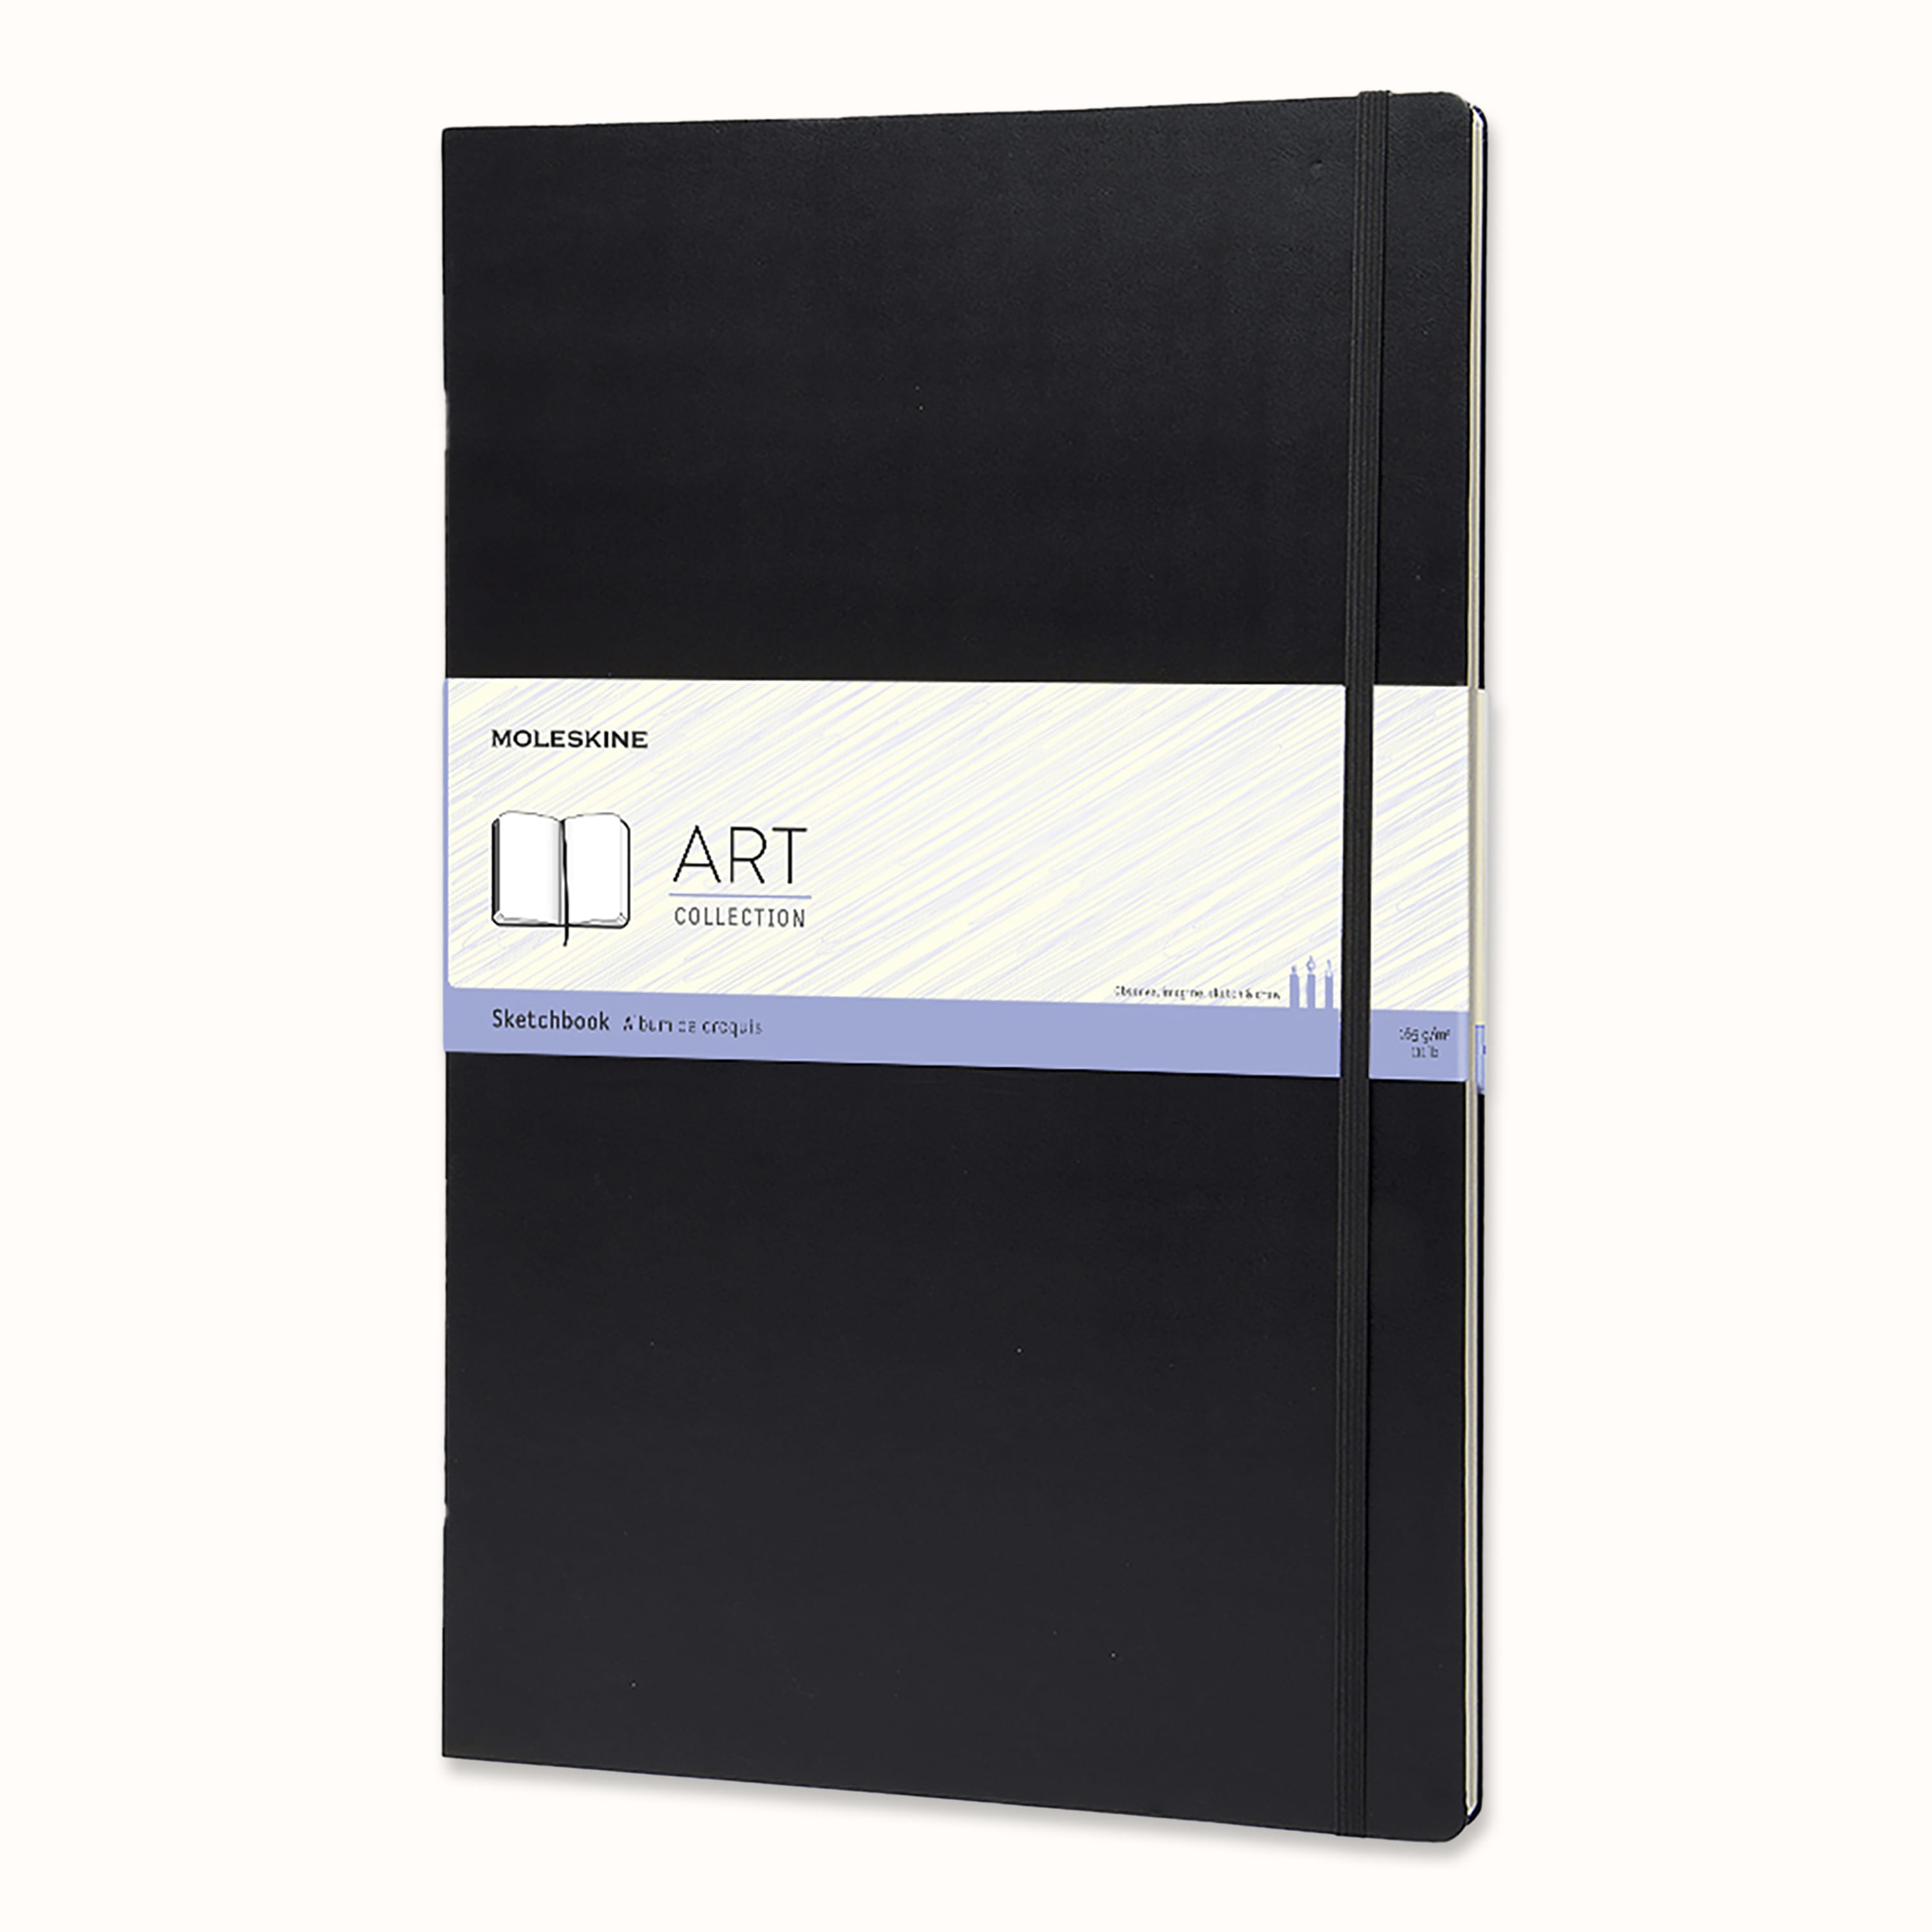 Moleskine Art Sketch Album Pocket 3.5 x 5.5 Black Plain/Blank Hard Cover 